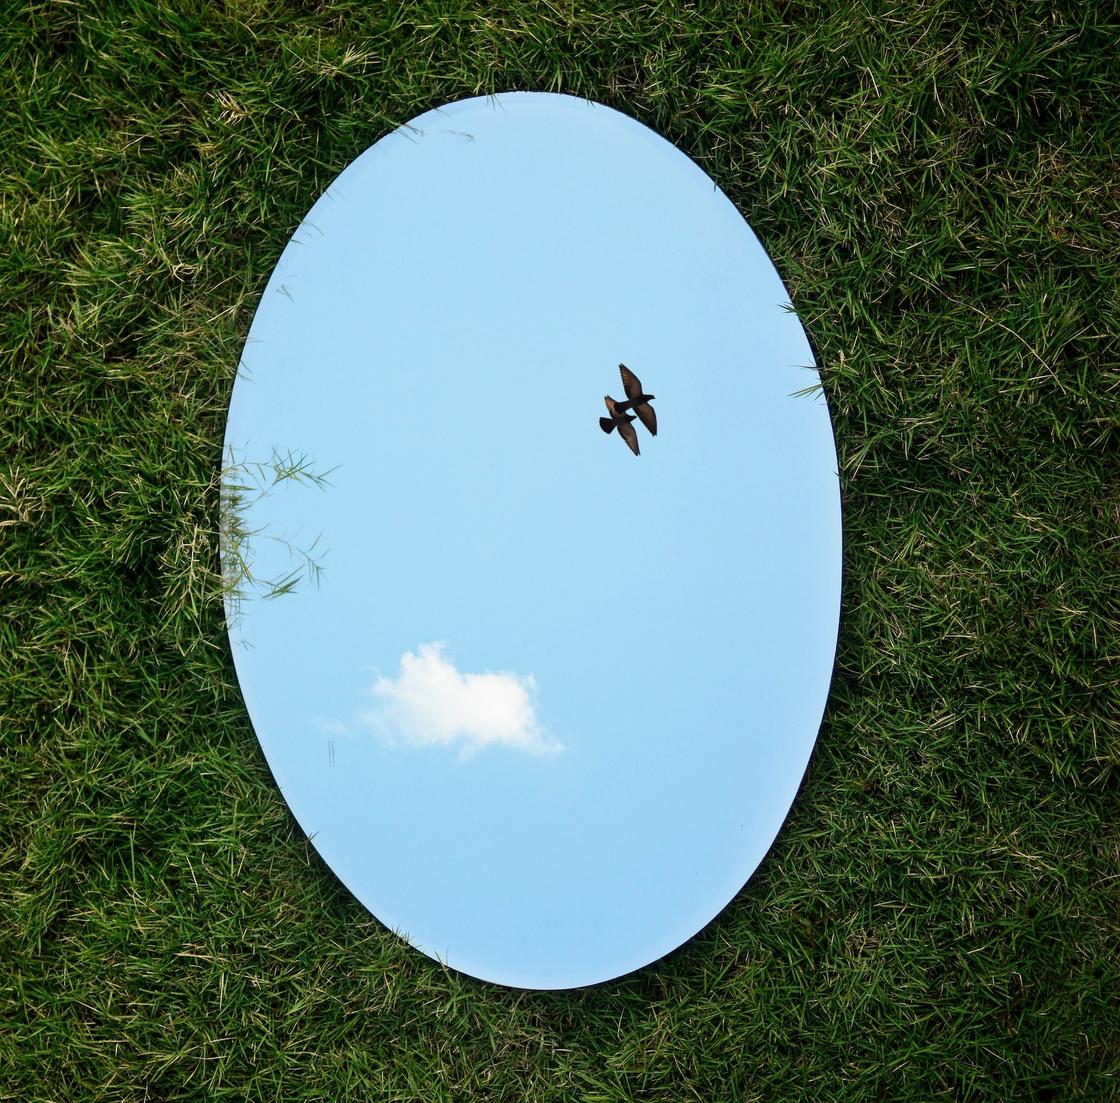 Зеркало на зеленой траве